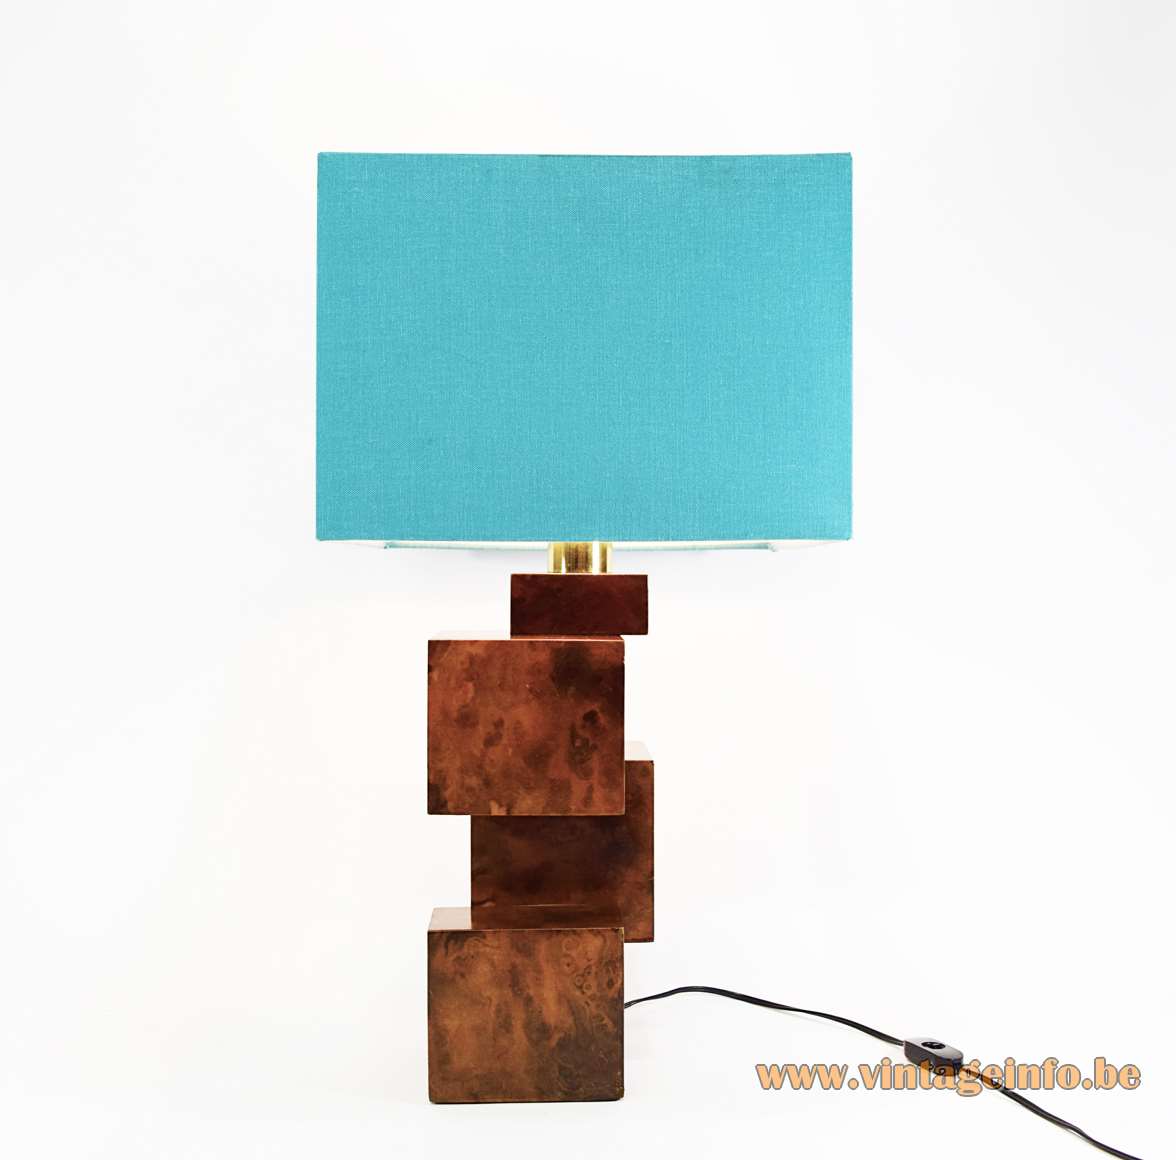 Burl walnut cityscape table lamp geometric wood cubes base square light blue fabric lampshade 1960s 1970s Italy